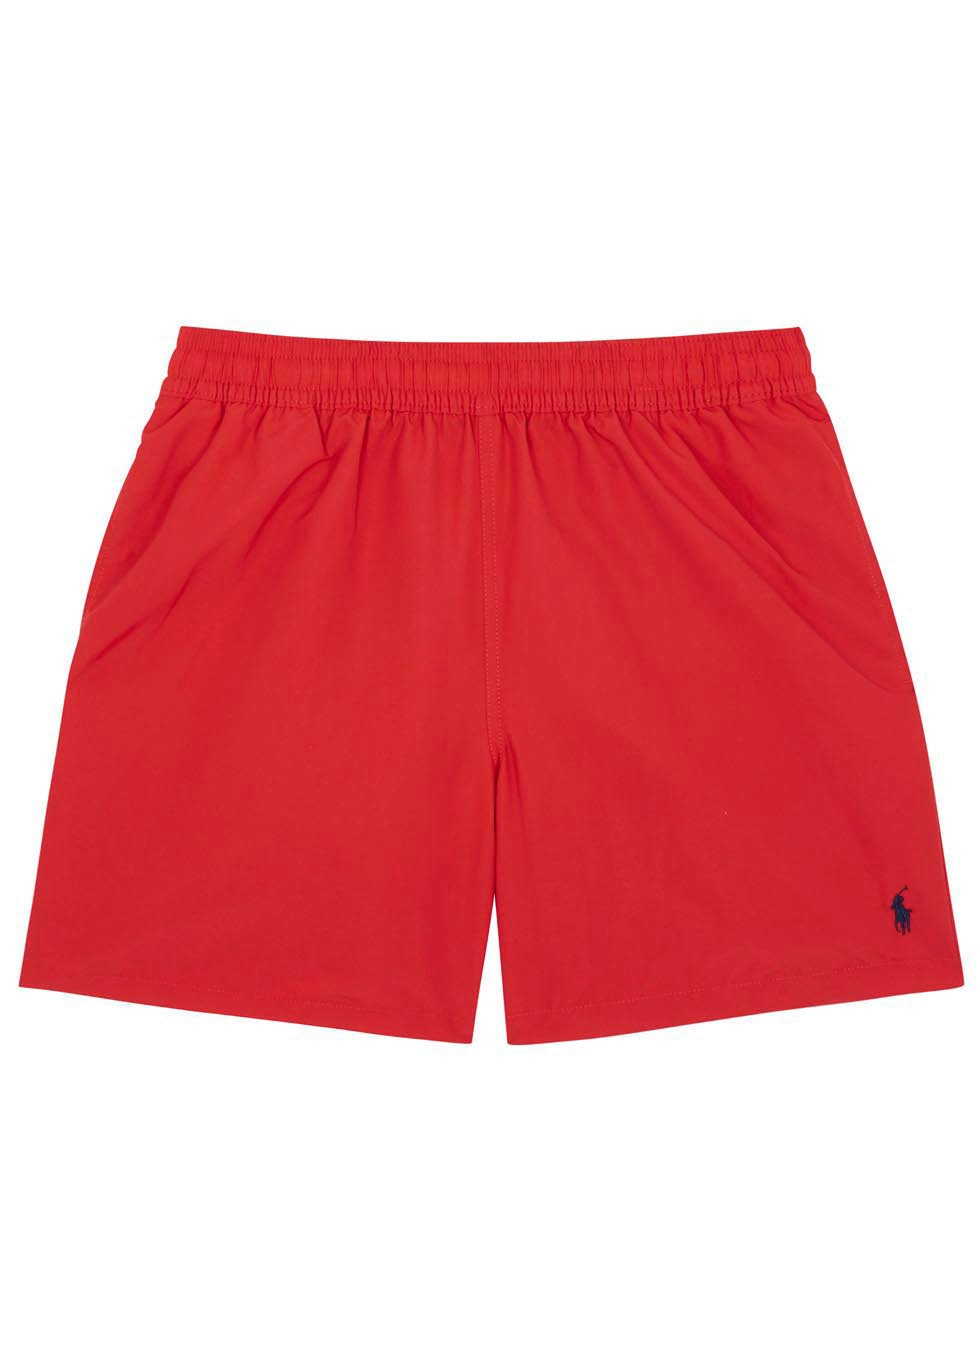 Polo Ralph Lauren Hawaiian red swim shorts - Harvey Nichols